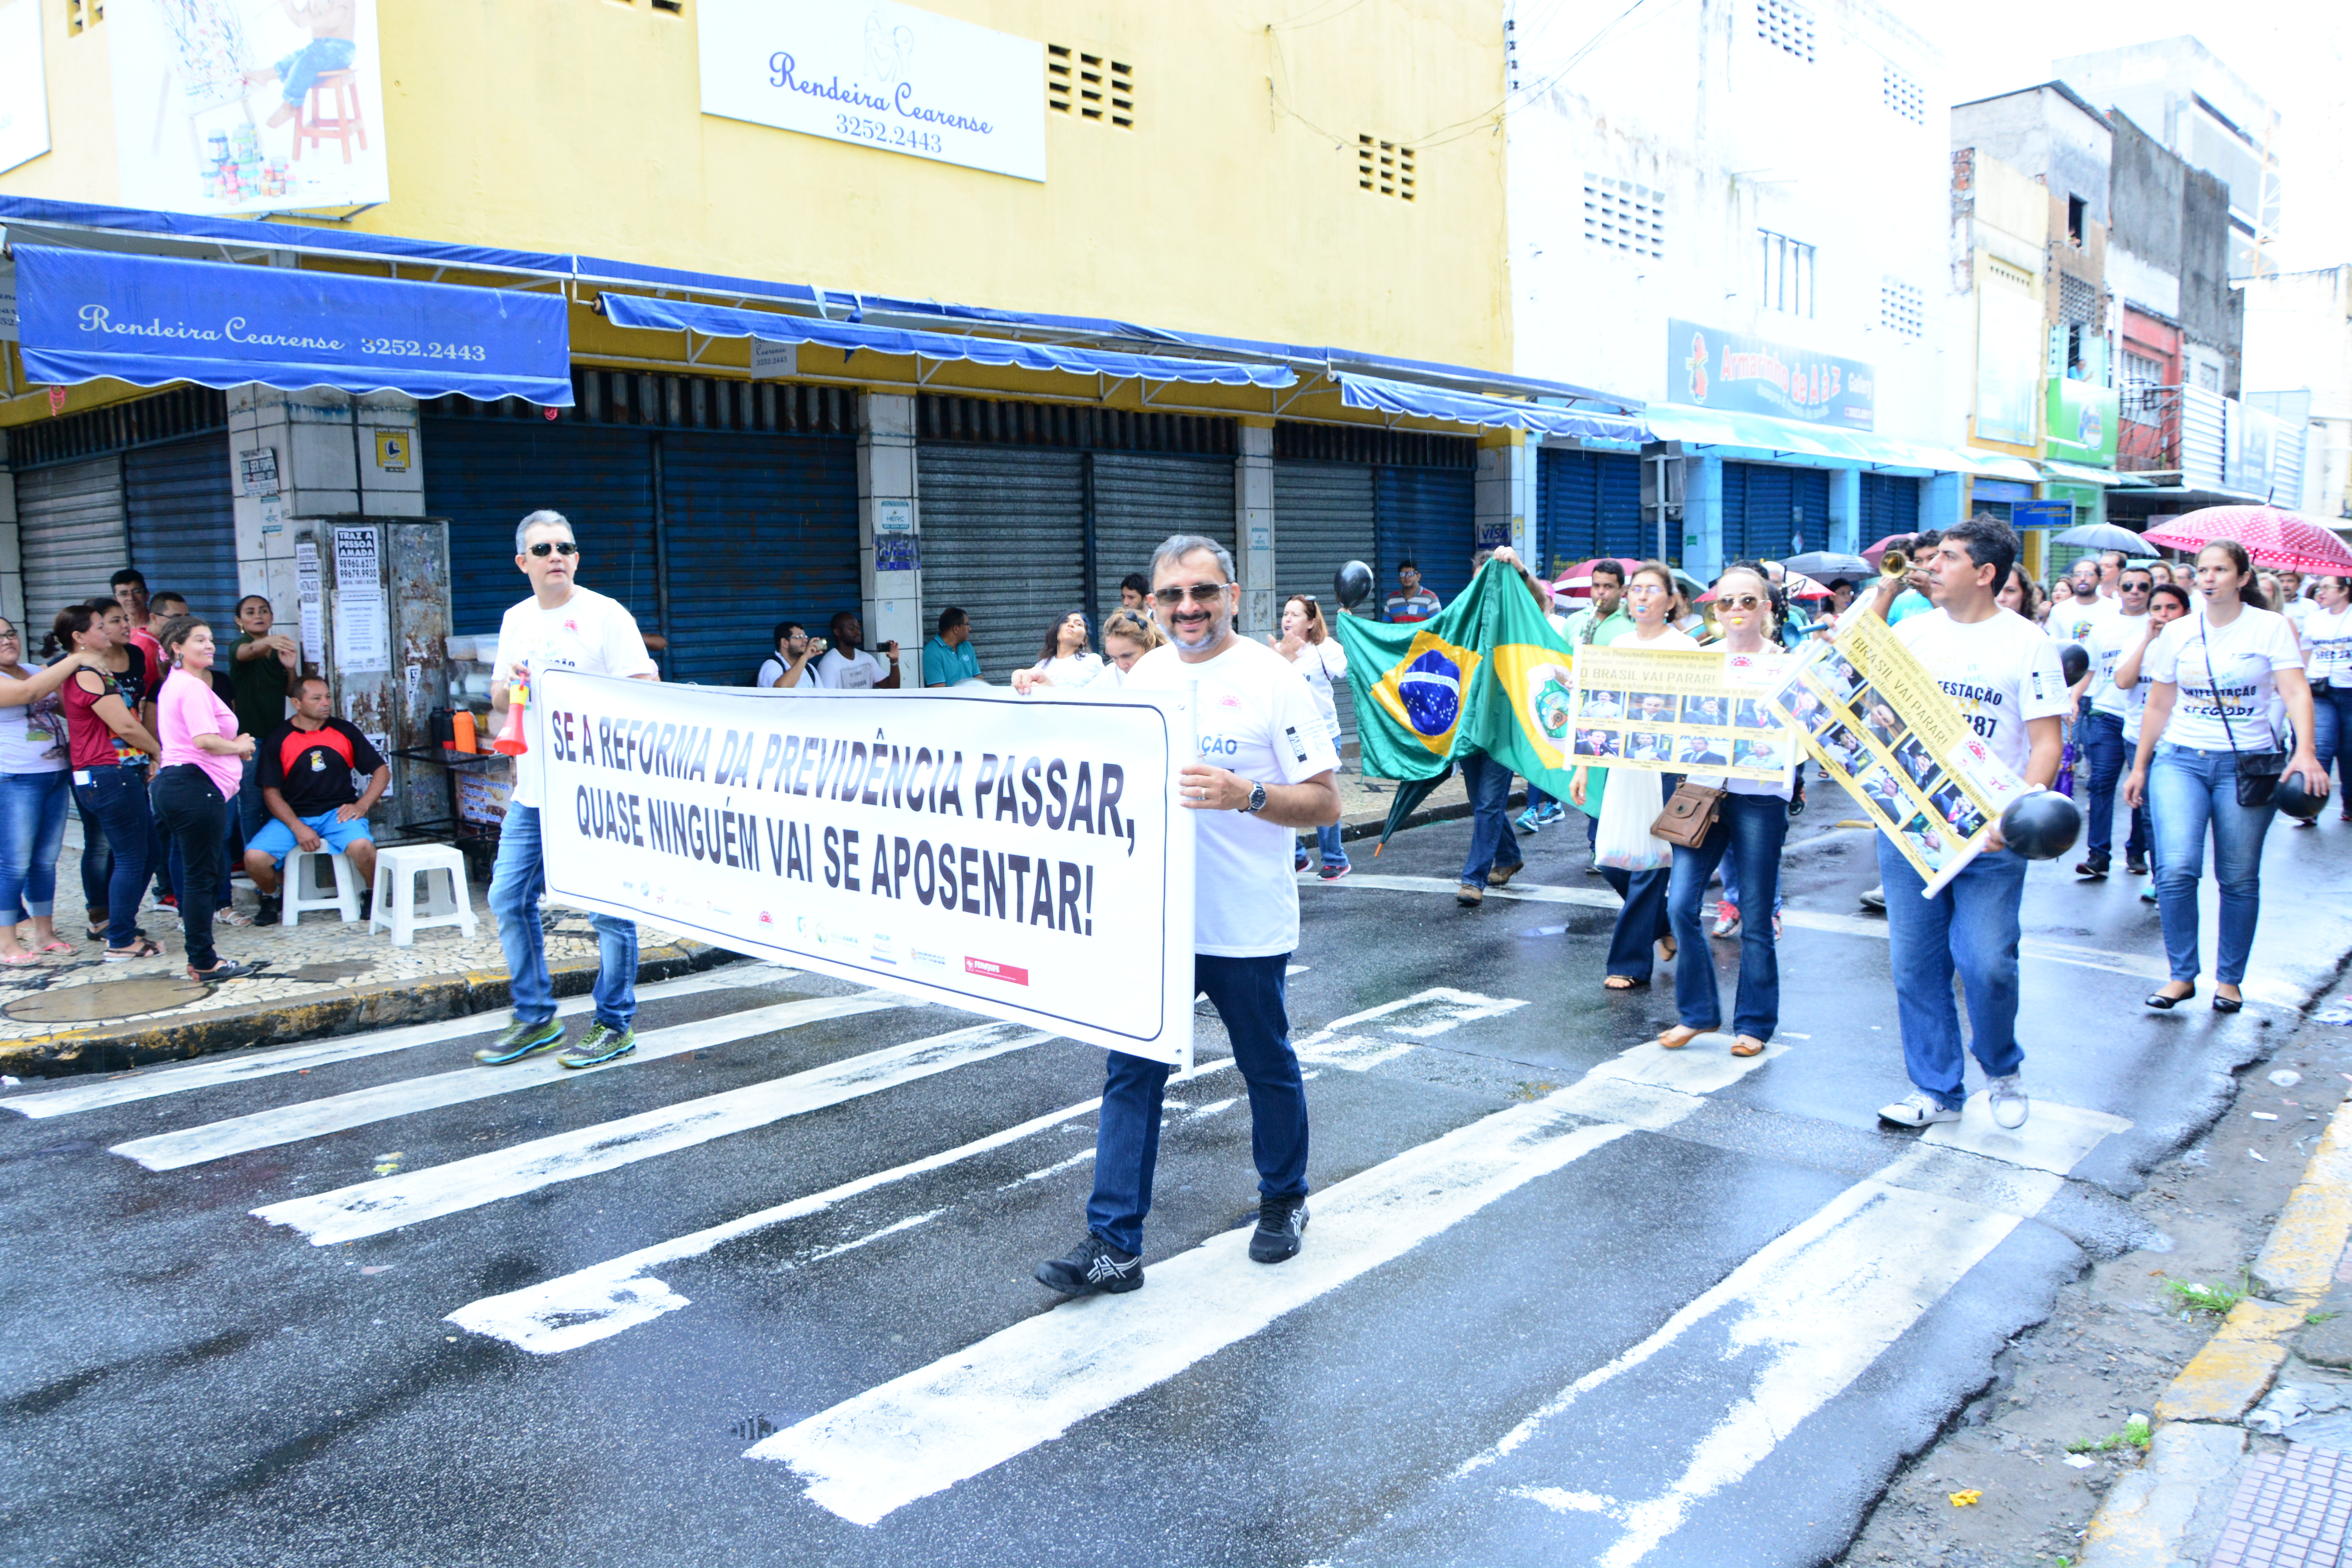 Dia 28/04/17 - Fortaleza parou contra à reforma previdenciaria e trabalhista.